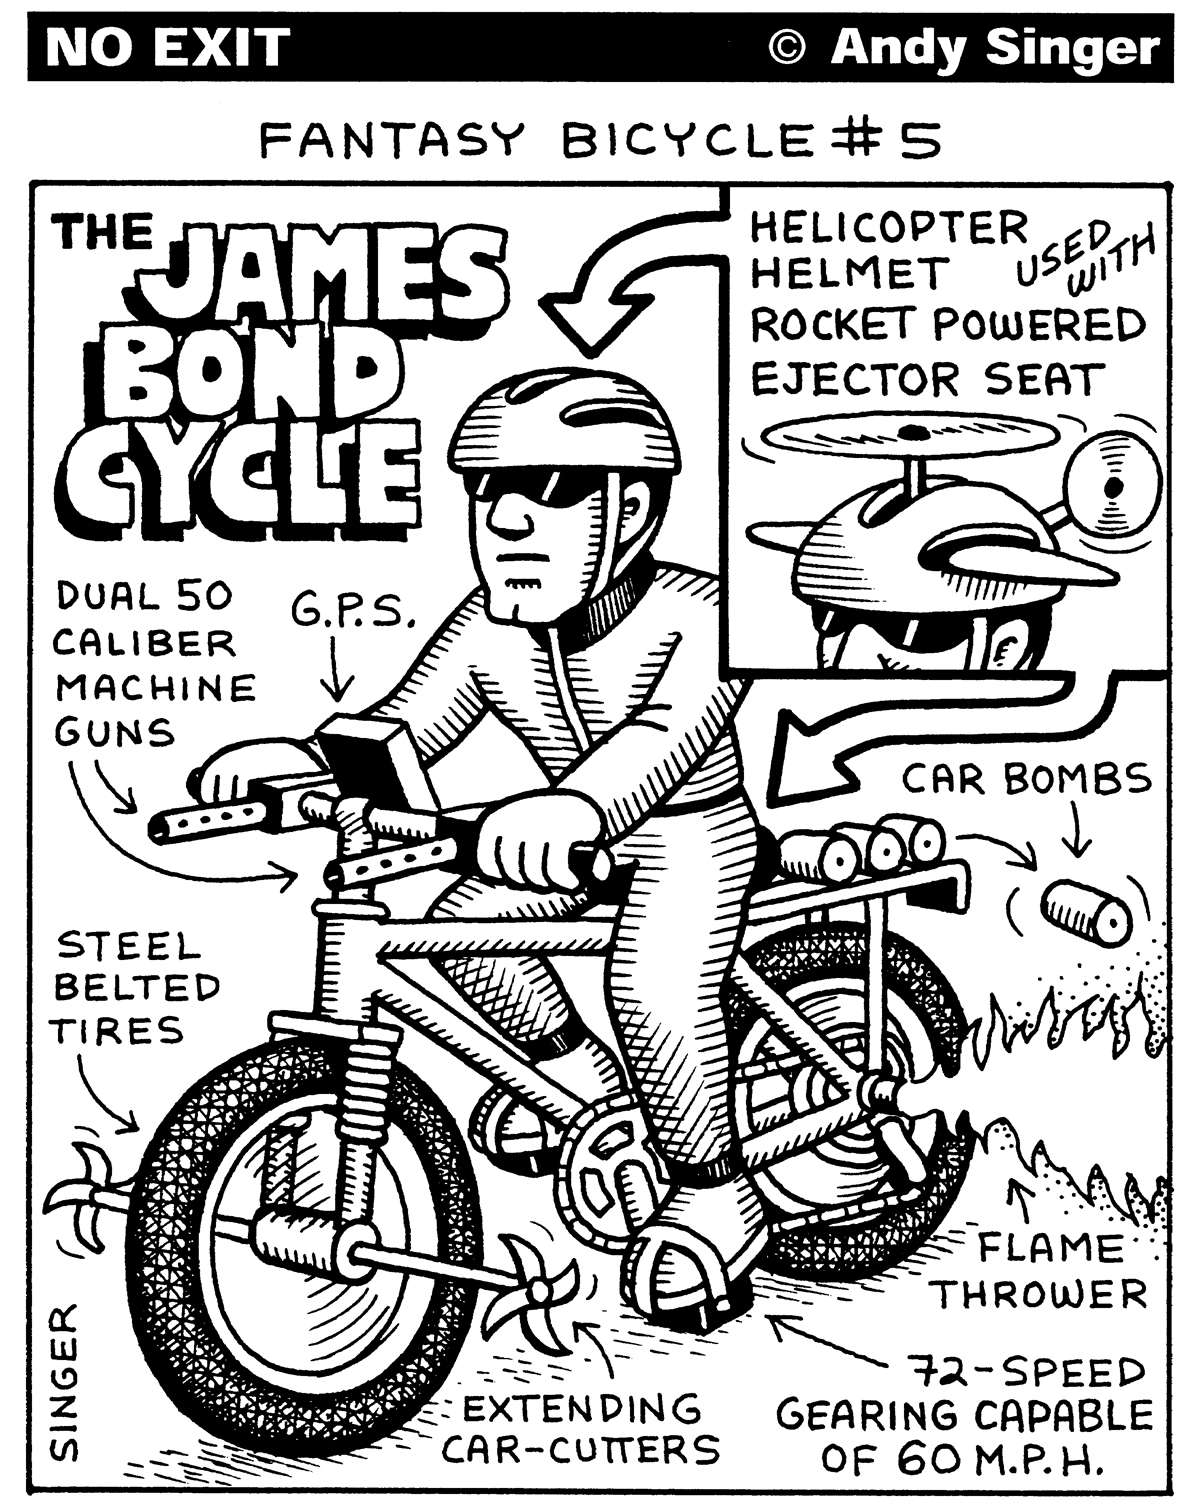 No Exit Bike Cartoon: The James Bond Cycle - Cycling West - Cycling Utah